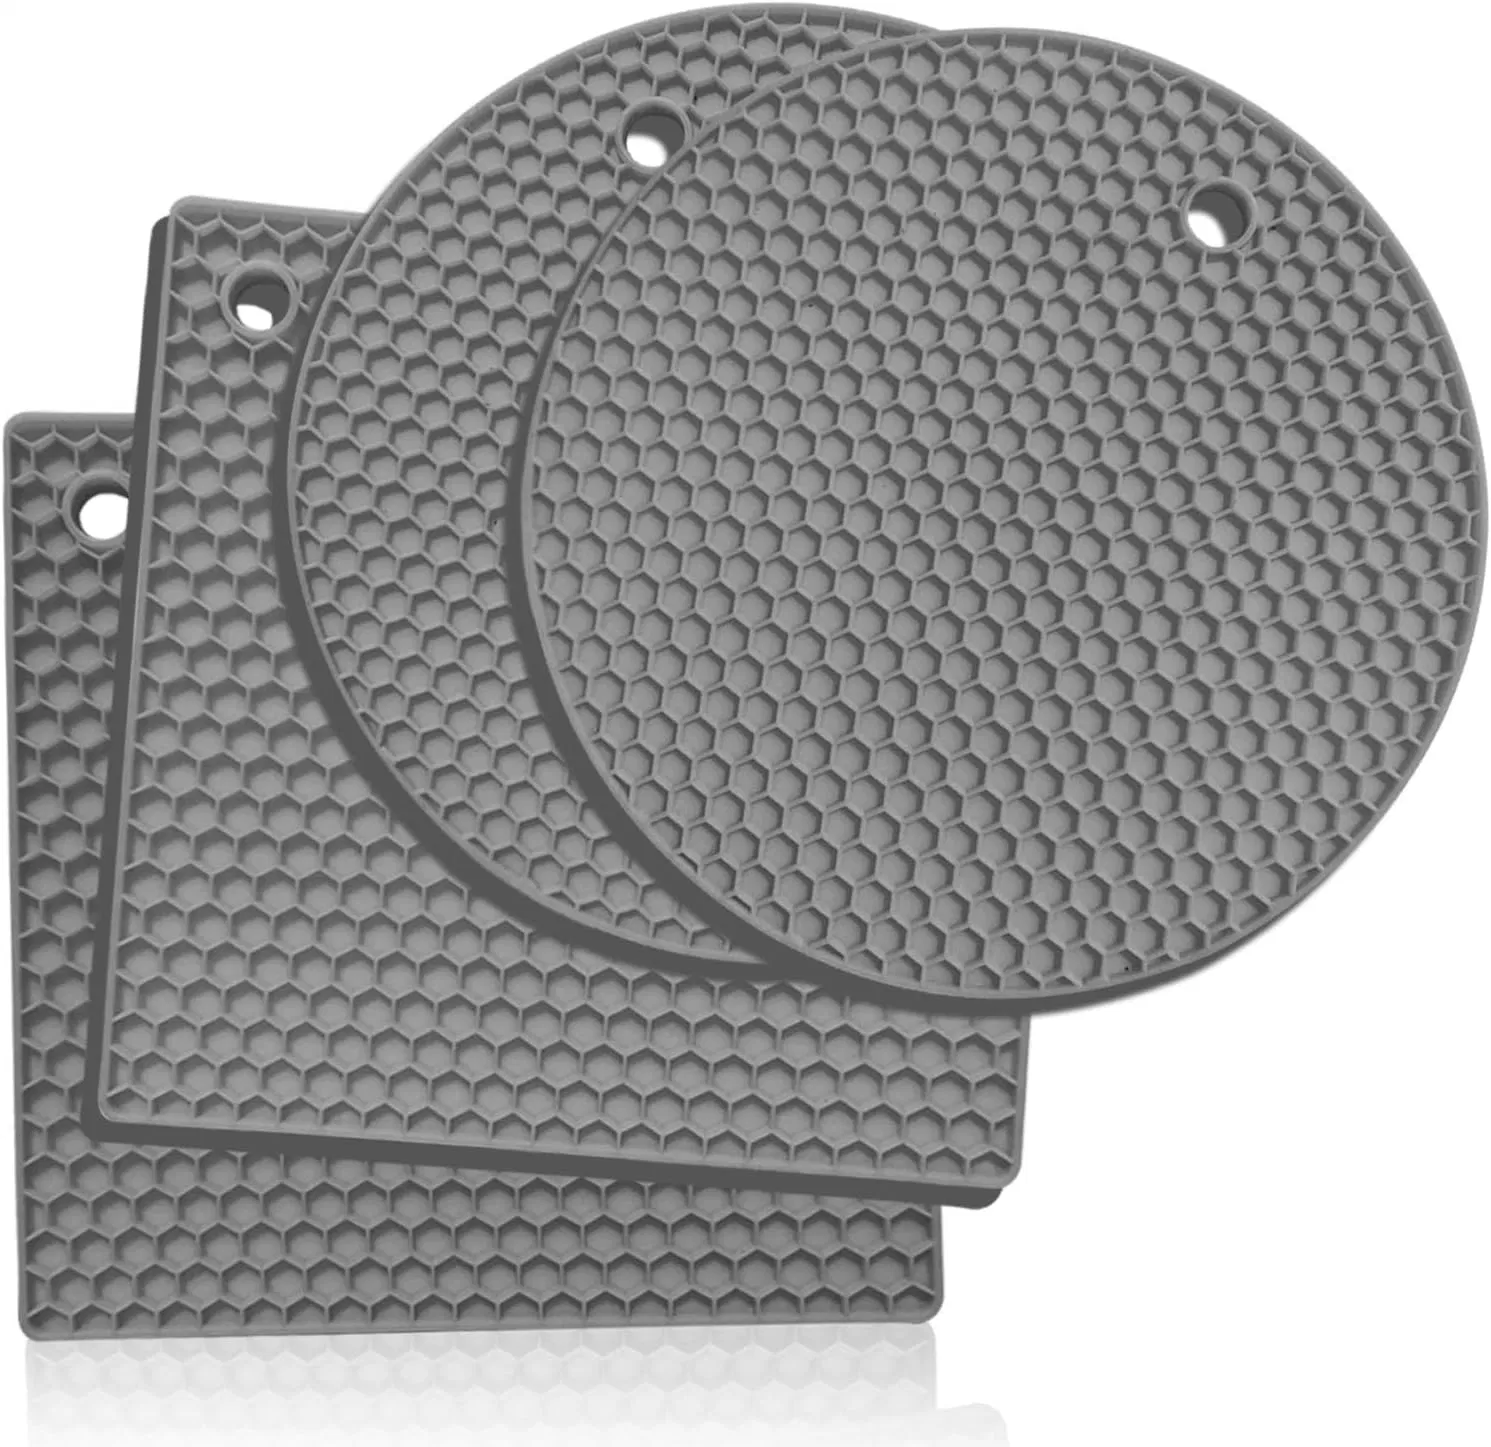 Suportes de silicone resistentes ao calor suportes de pote multiusos discos quentes antiderrapantes para os suportes de Cozinha, abridores de boiões quentes